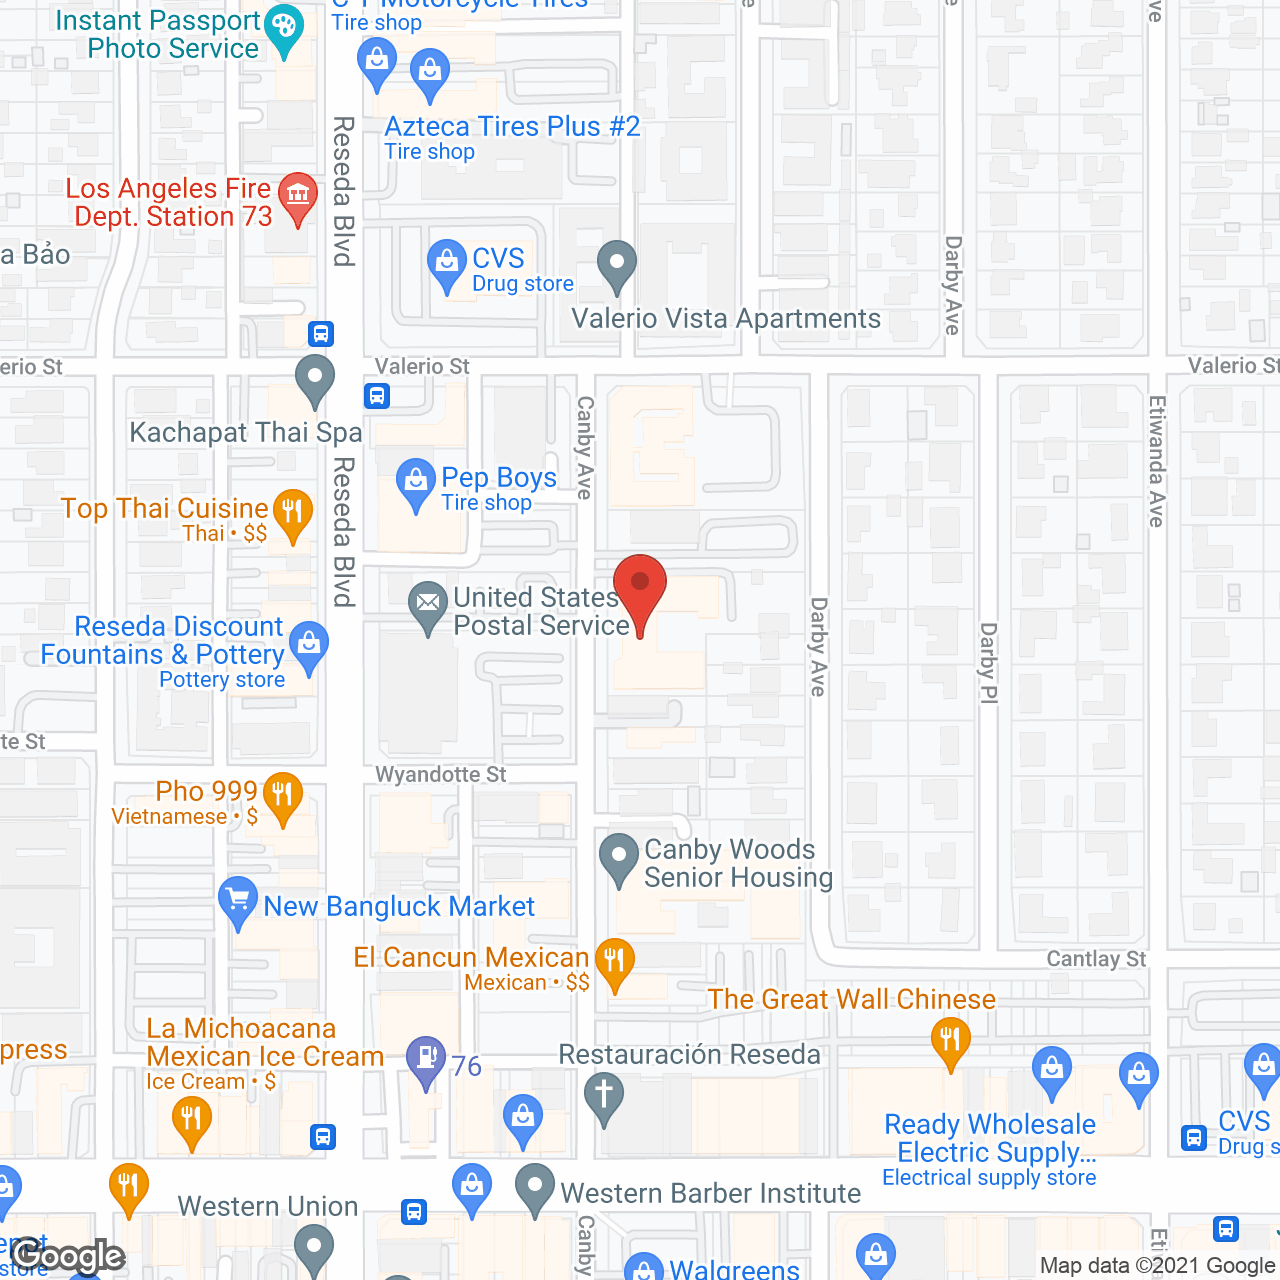 Ambassador Garden in google map